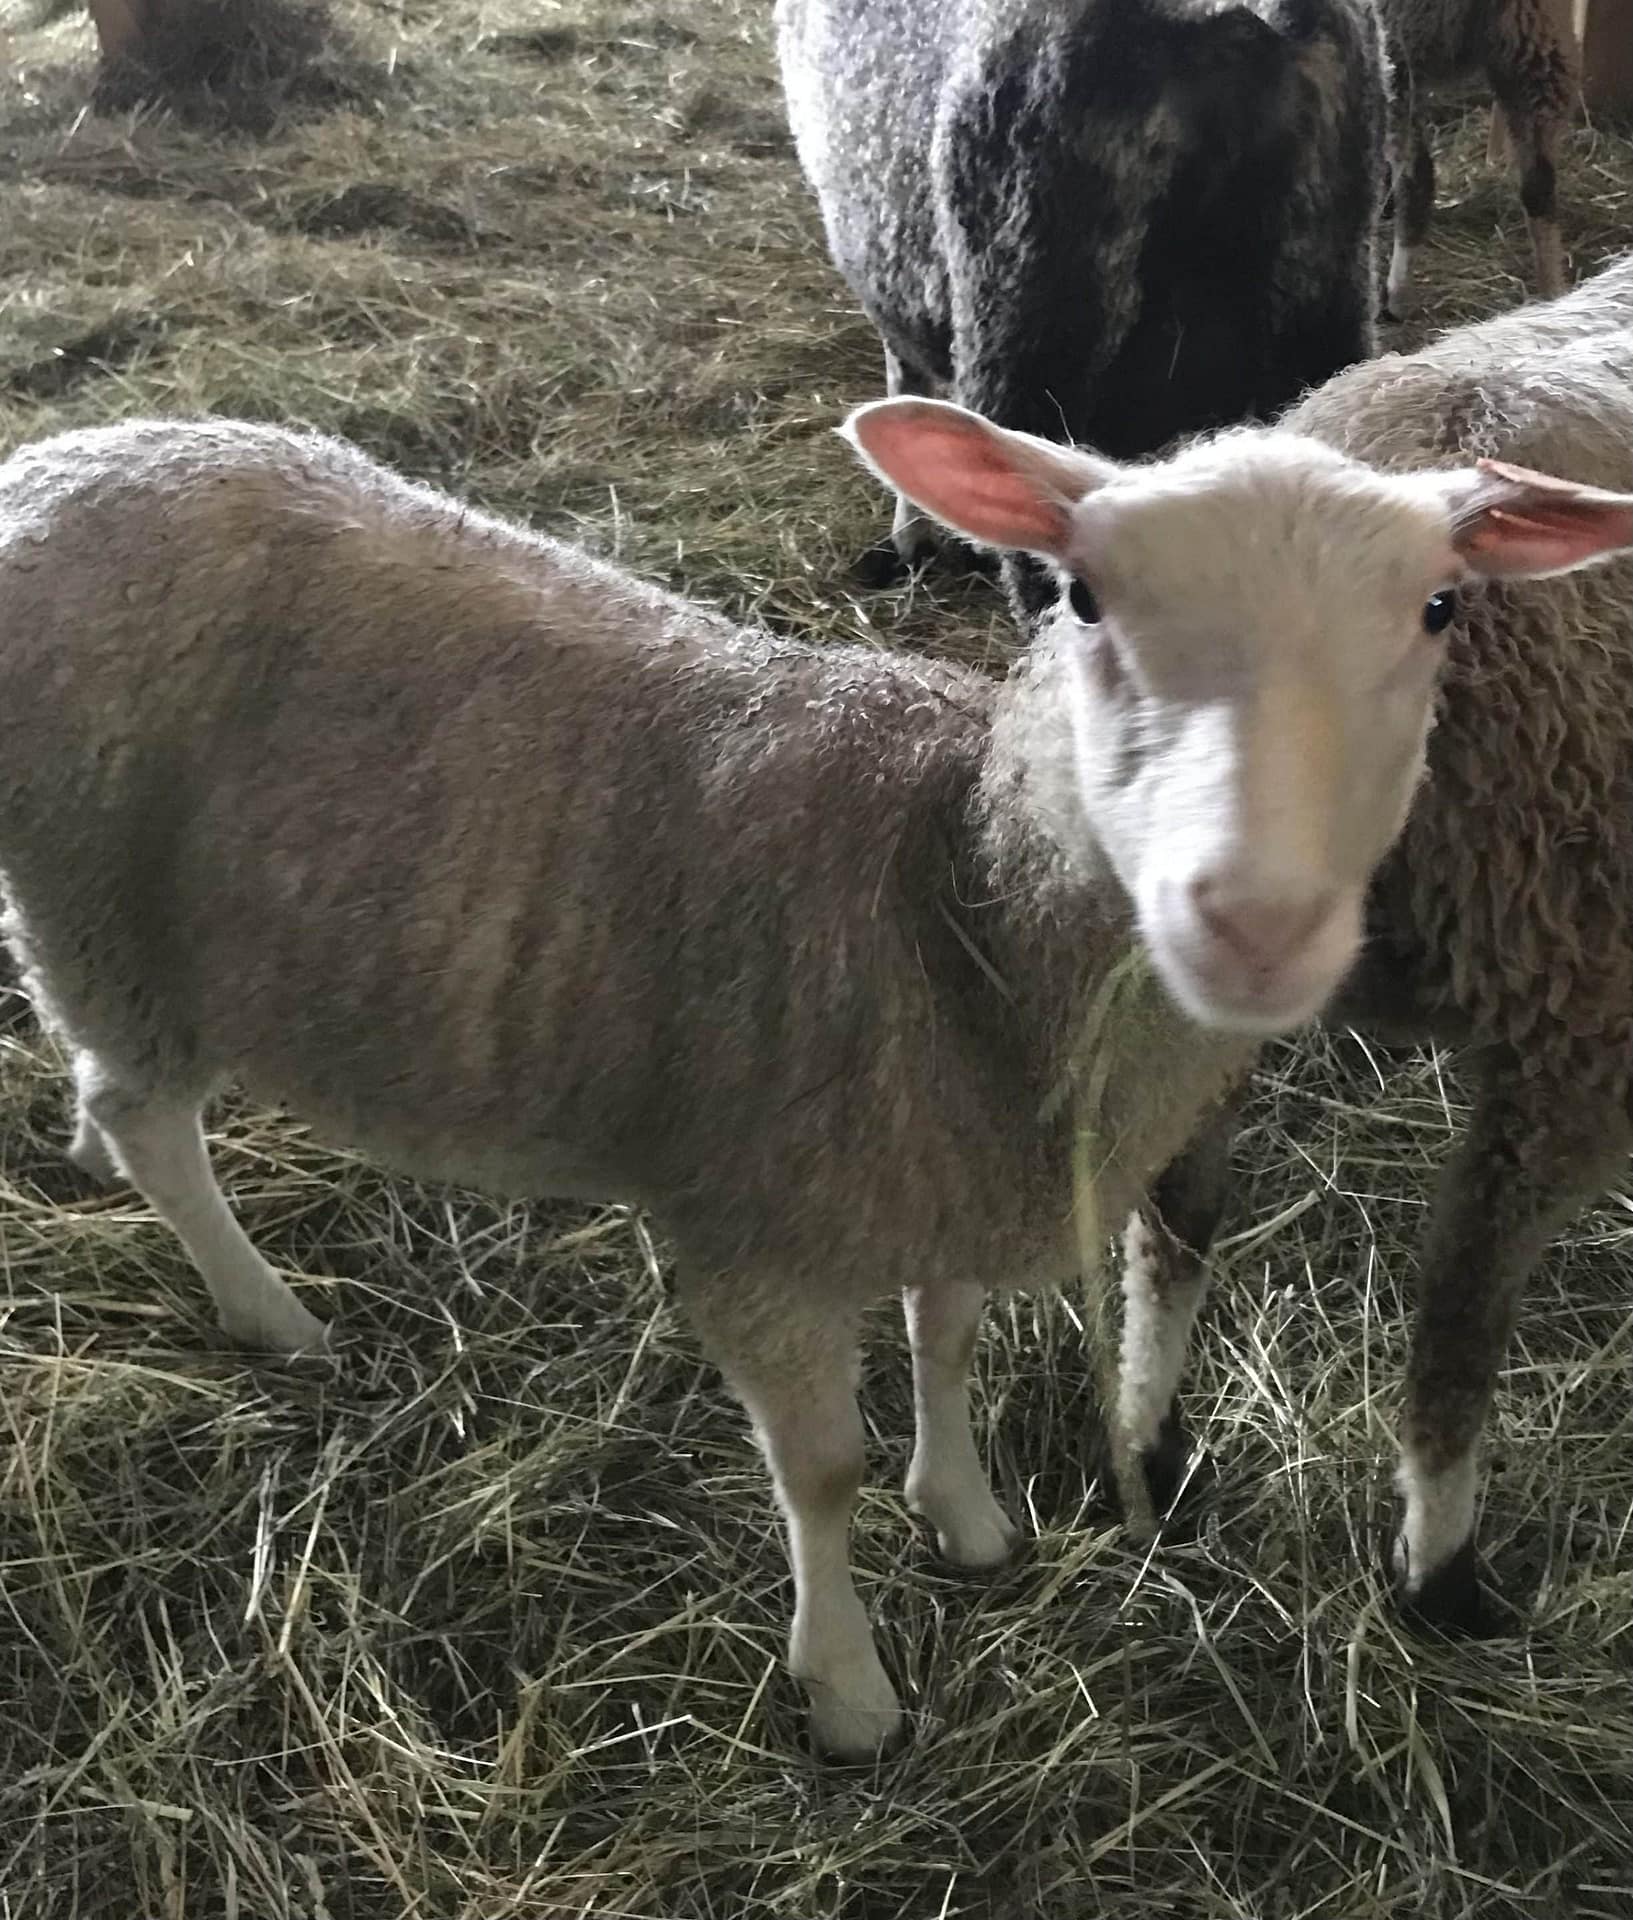 Finnsheep ewe lamb for sale 2108